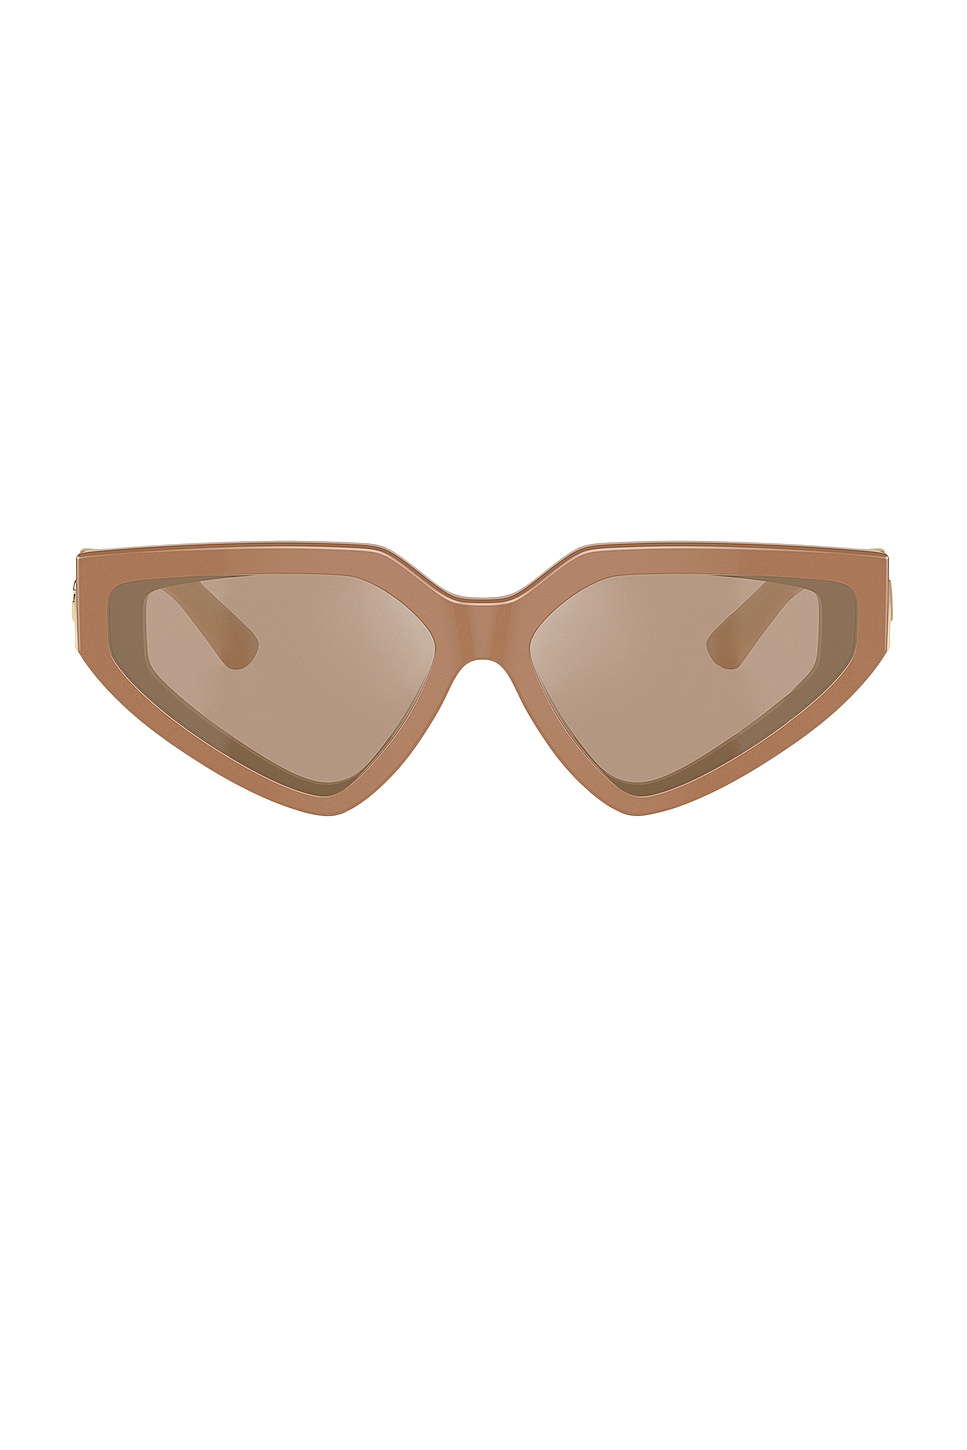 Geometric Sunglasses in Tan